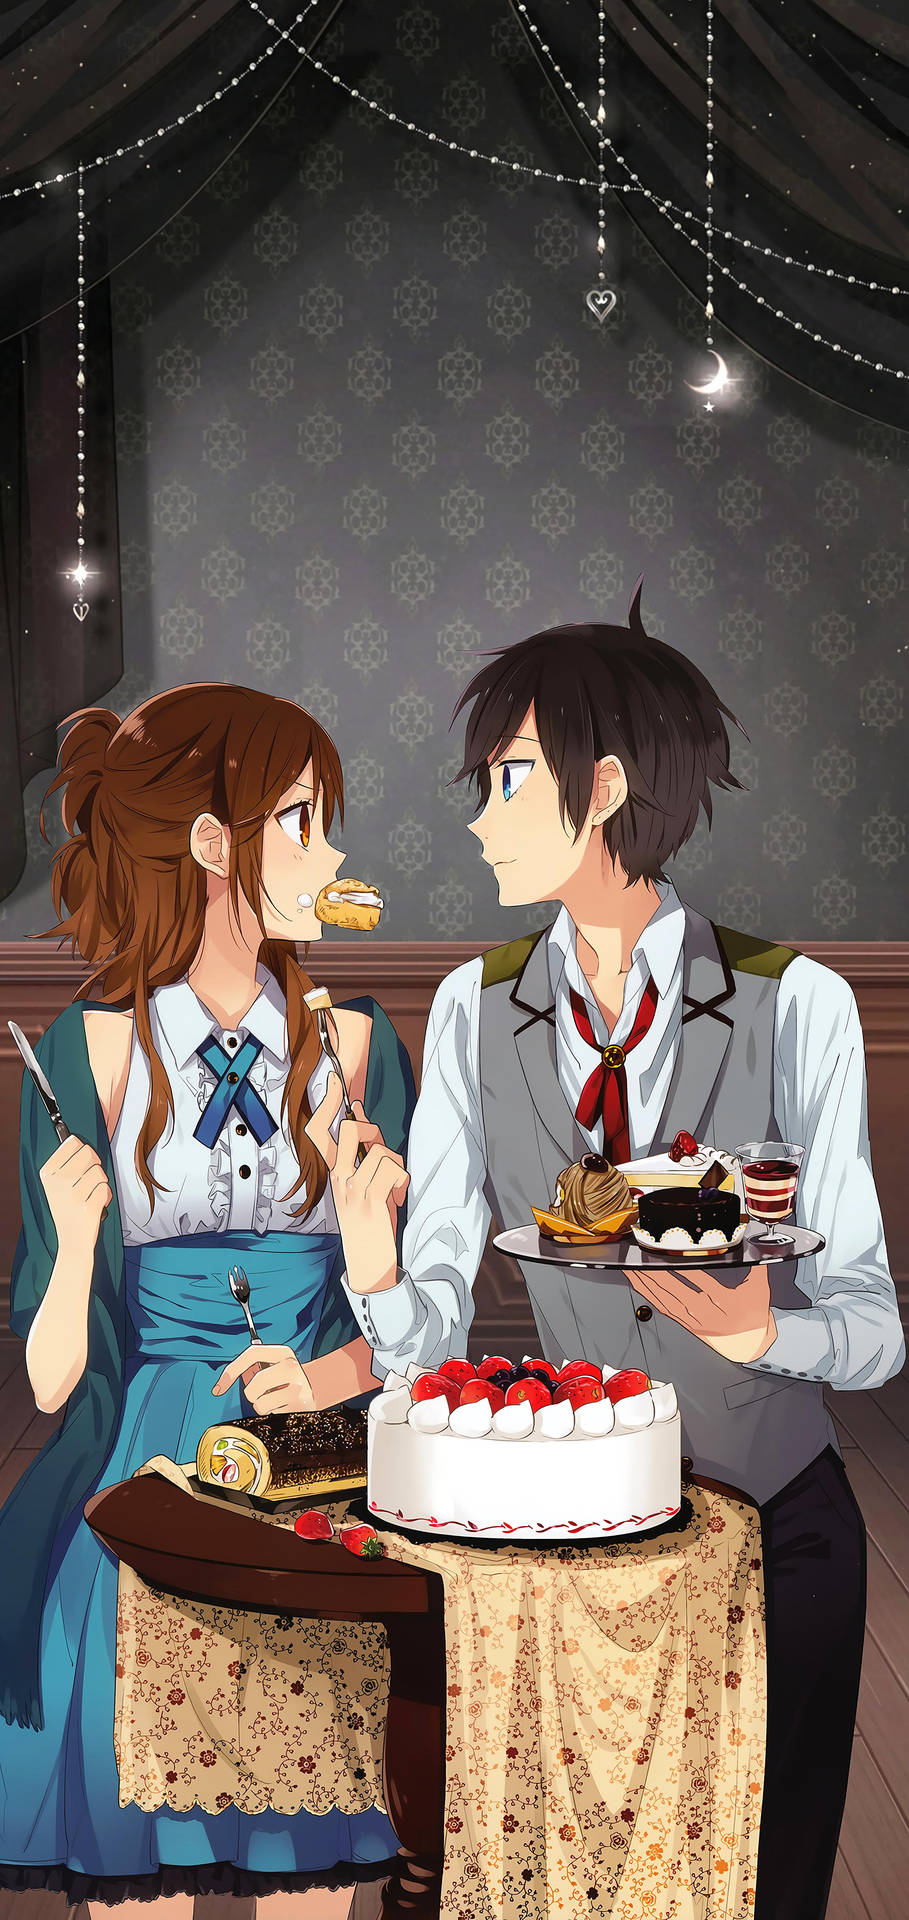 Horimiya Kyouko And Izumi Eating Dessert